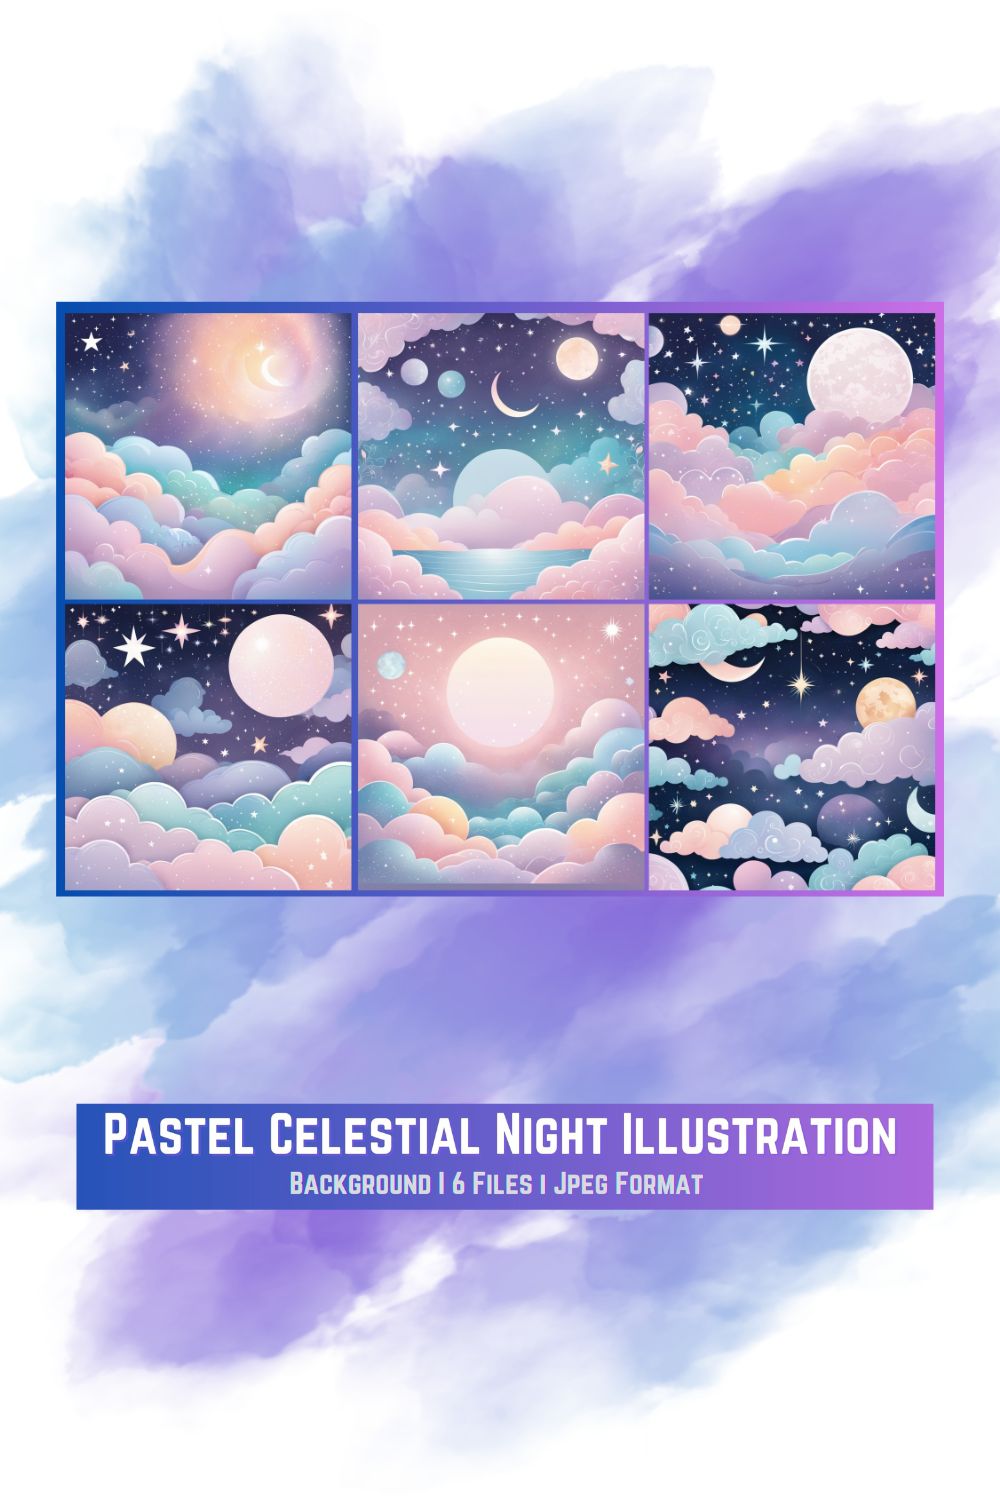 Pastel Celestial Night Illustration pinterest preview image.